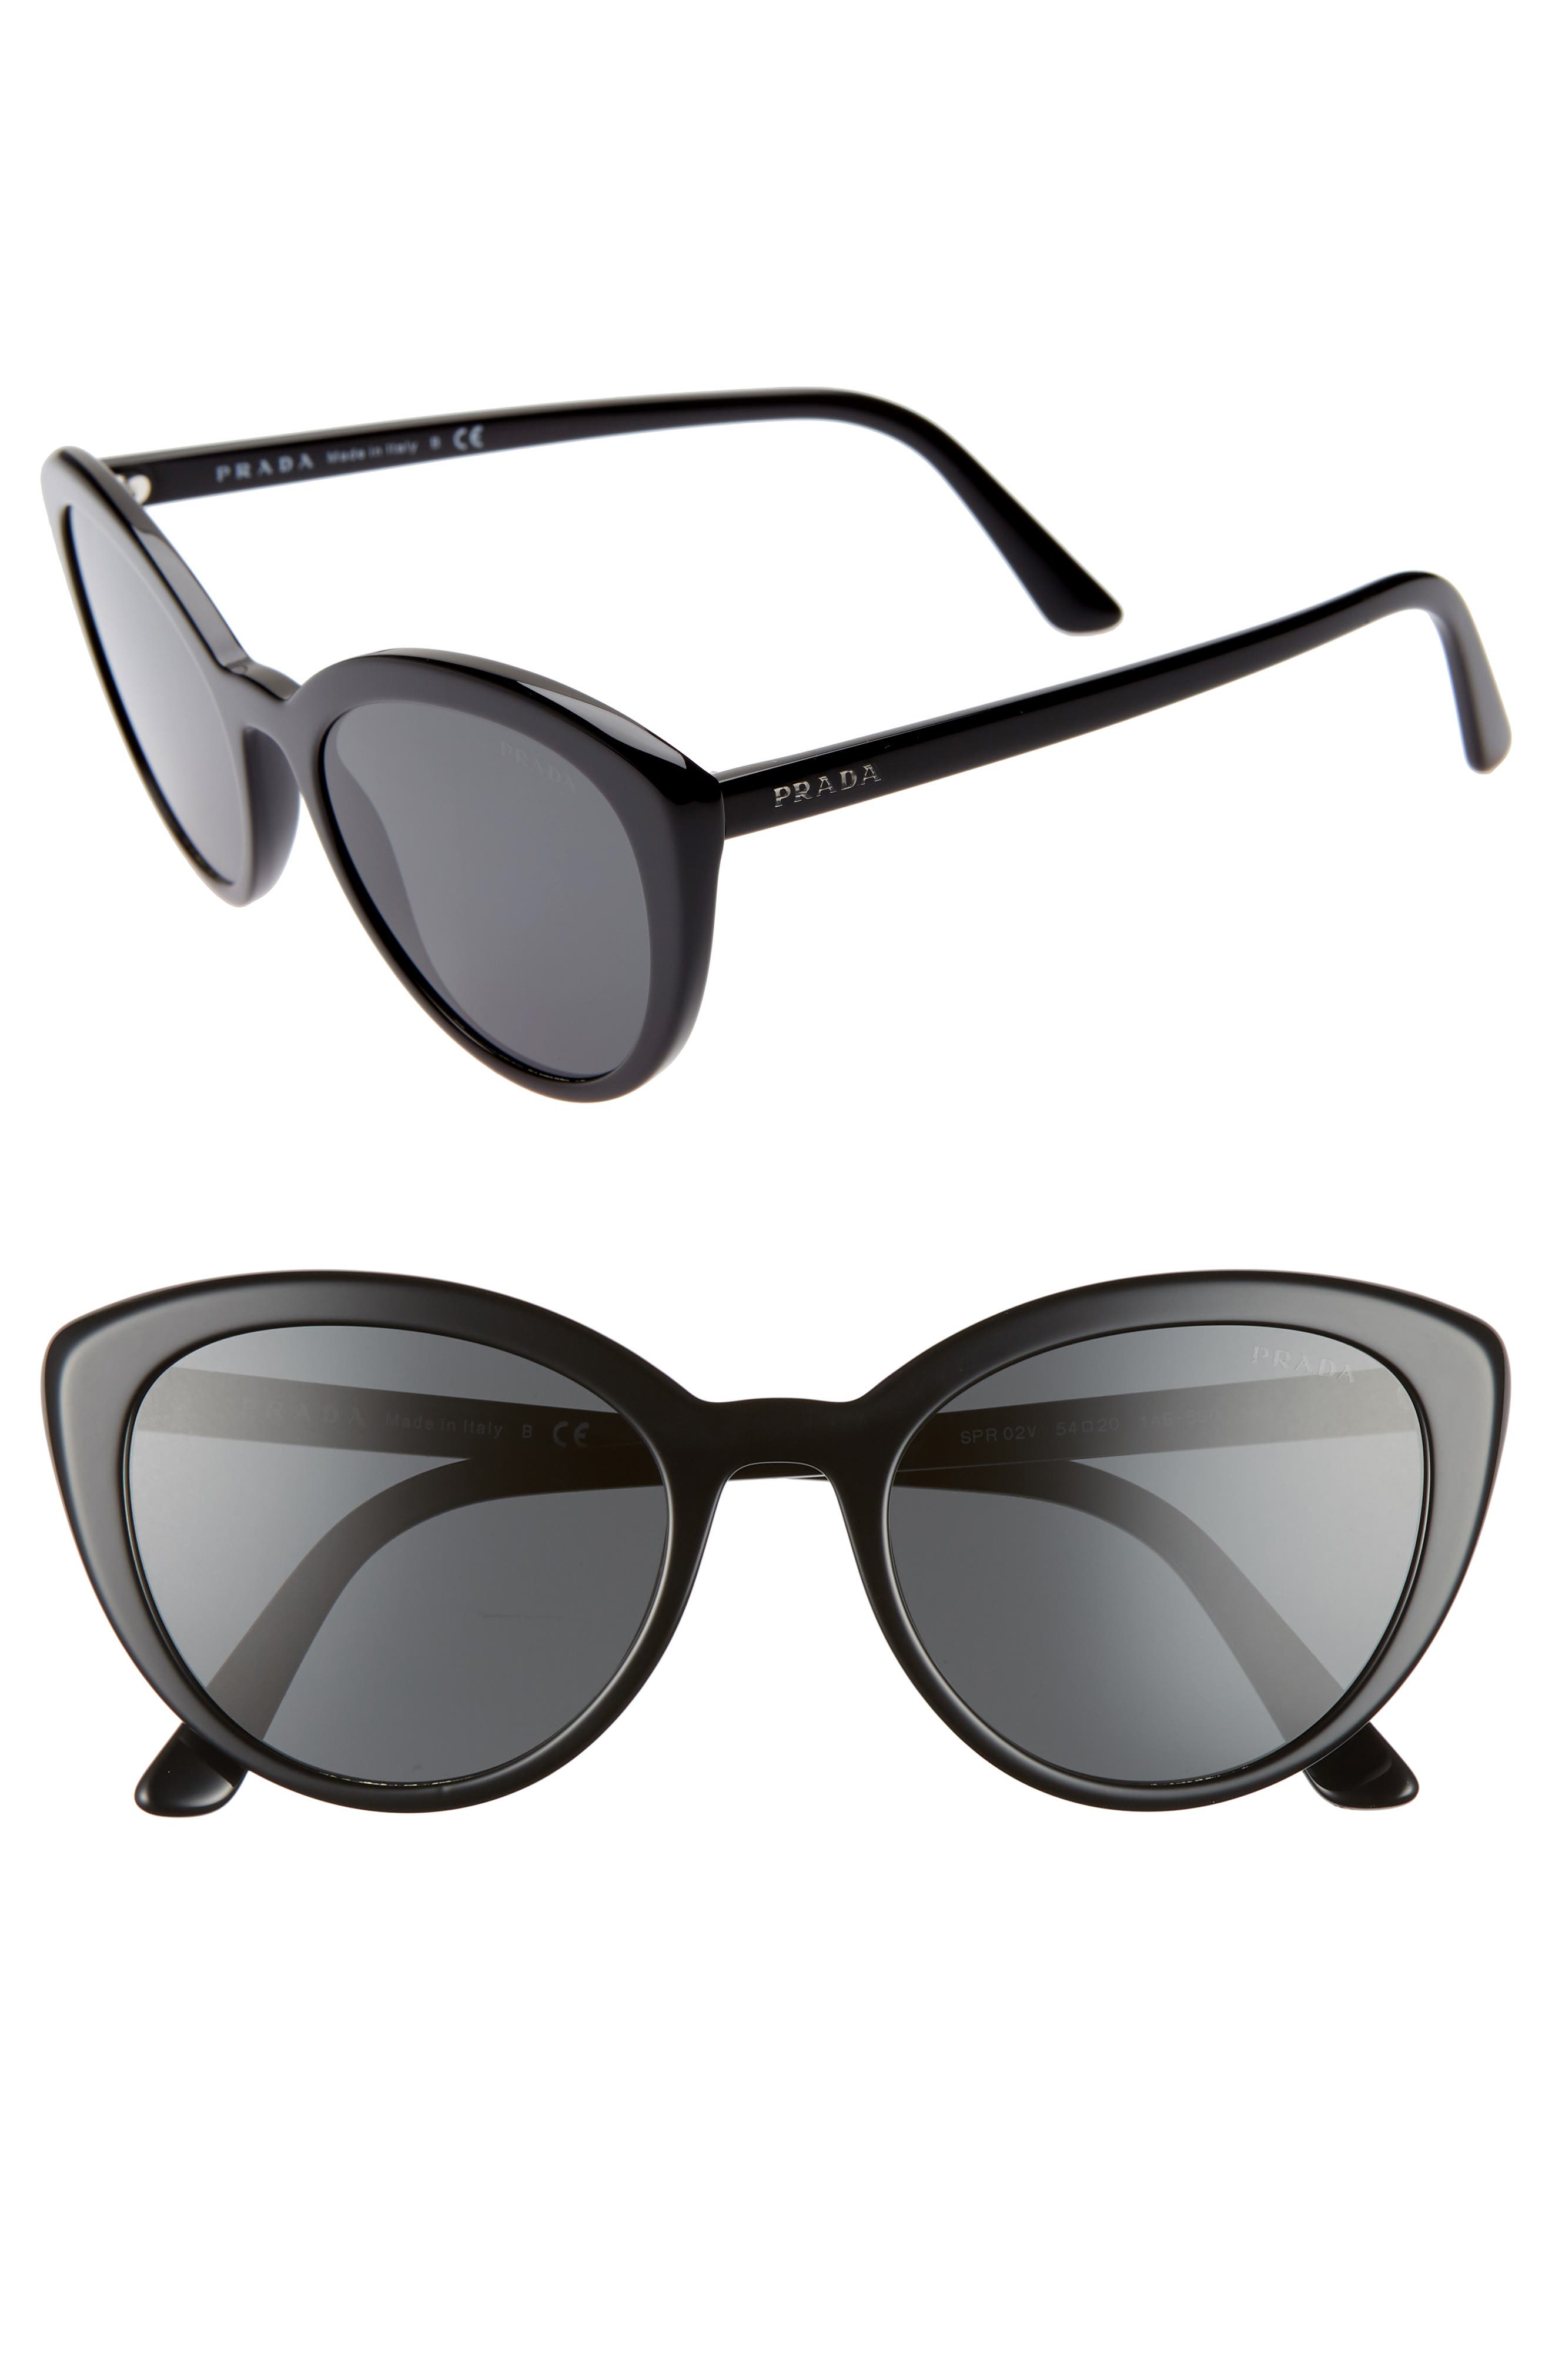 prada black and white sunglasses